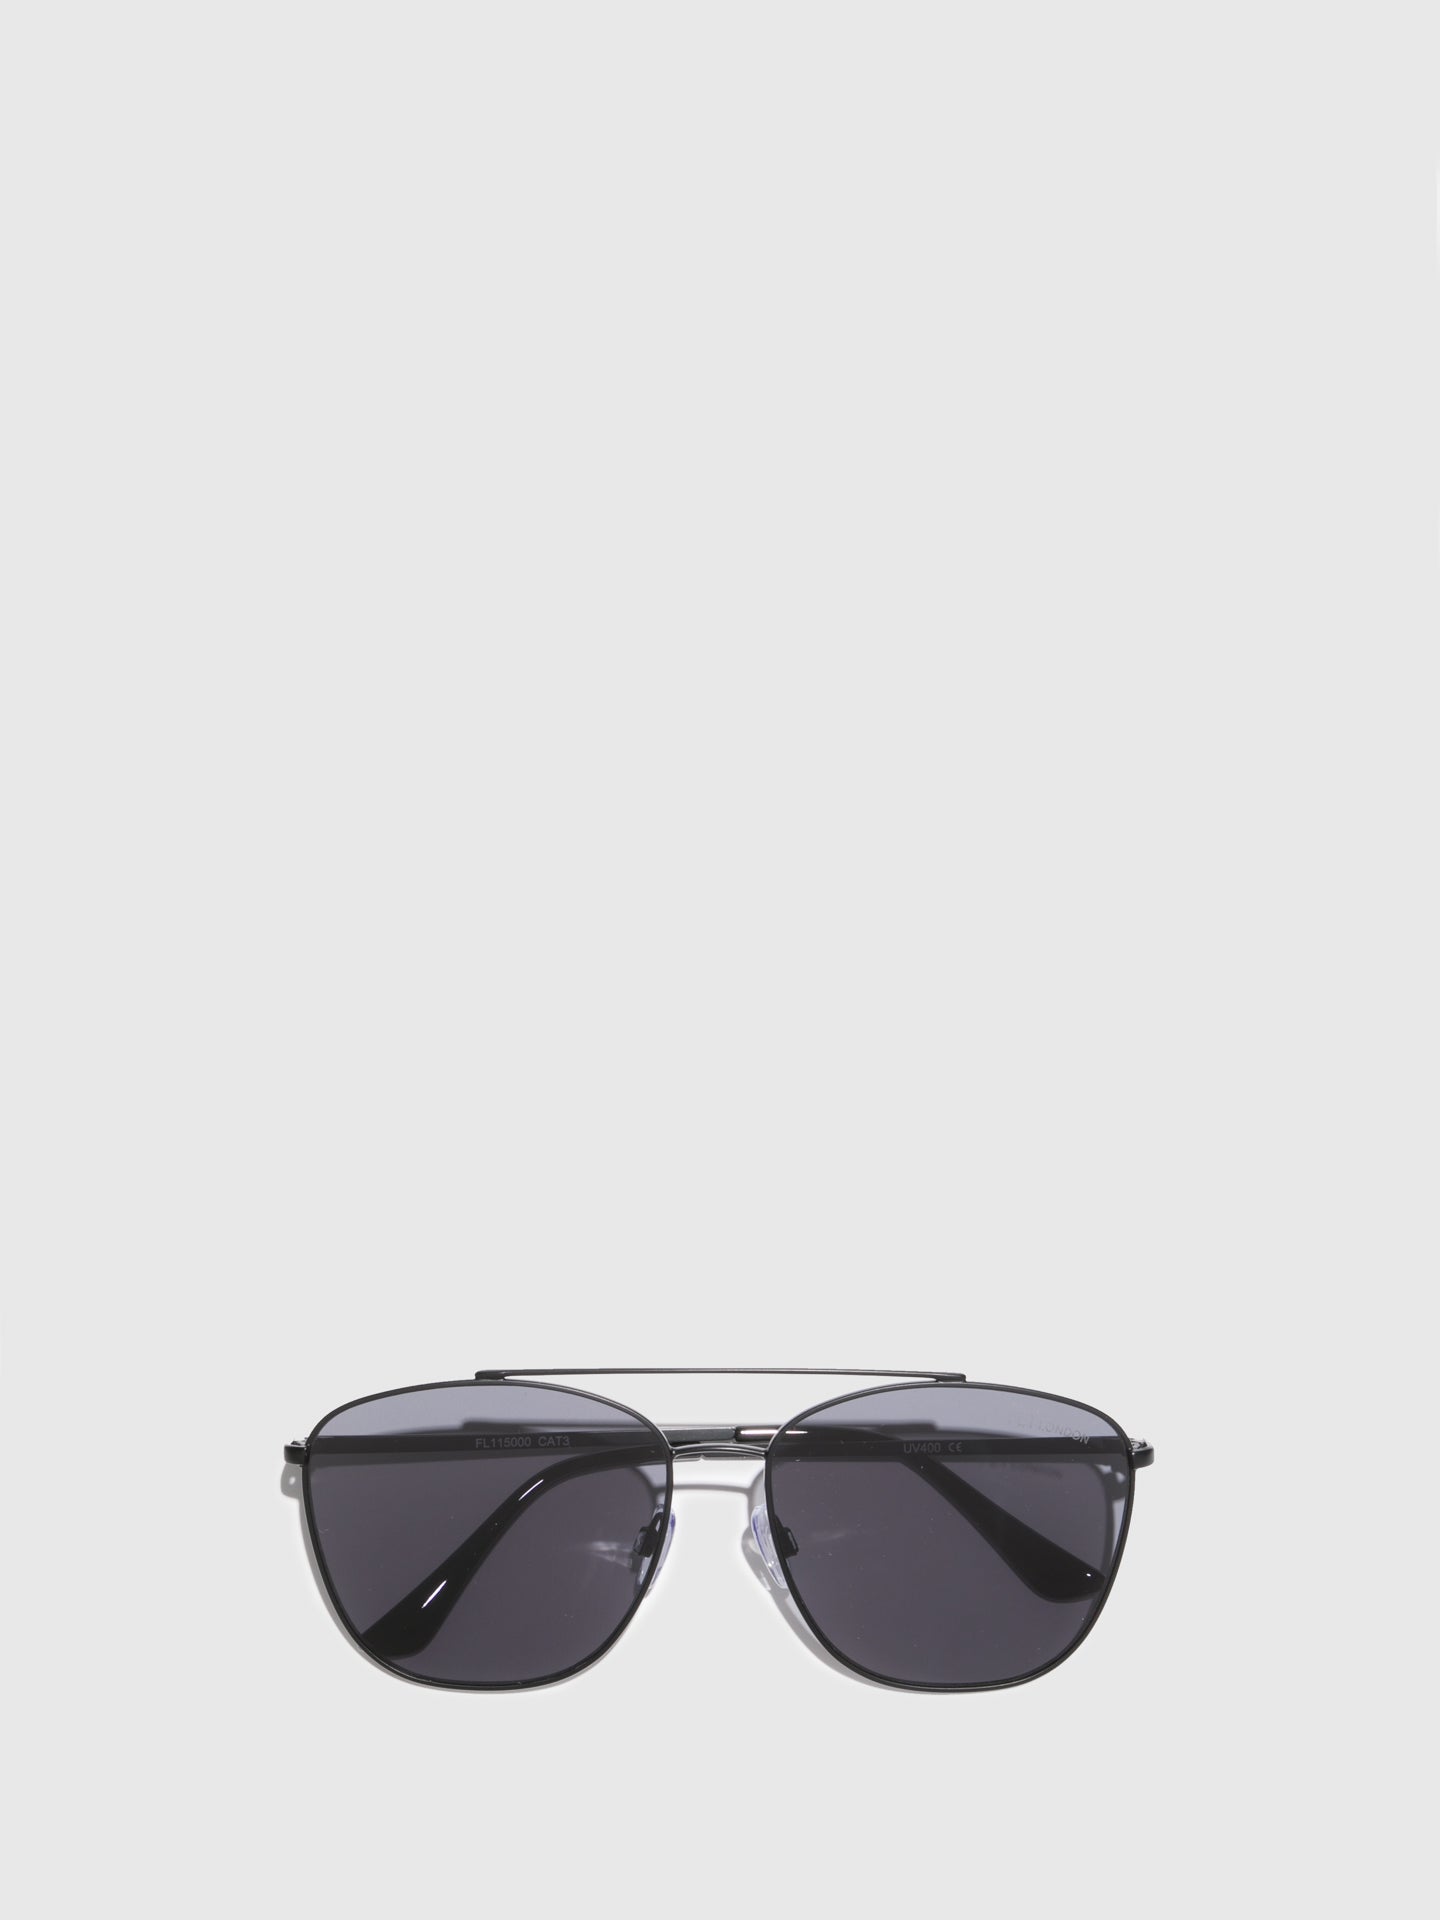 Fly London Black Aviator Sunglasses